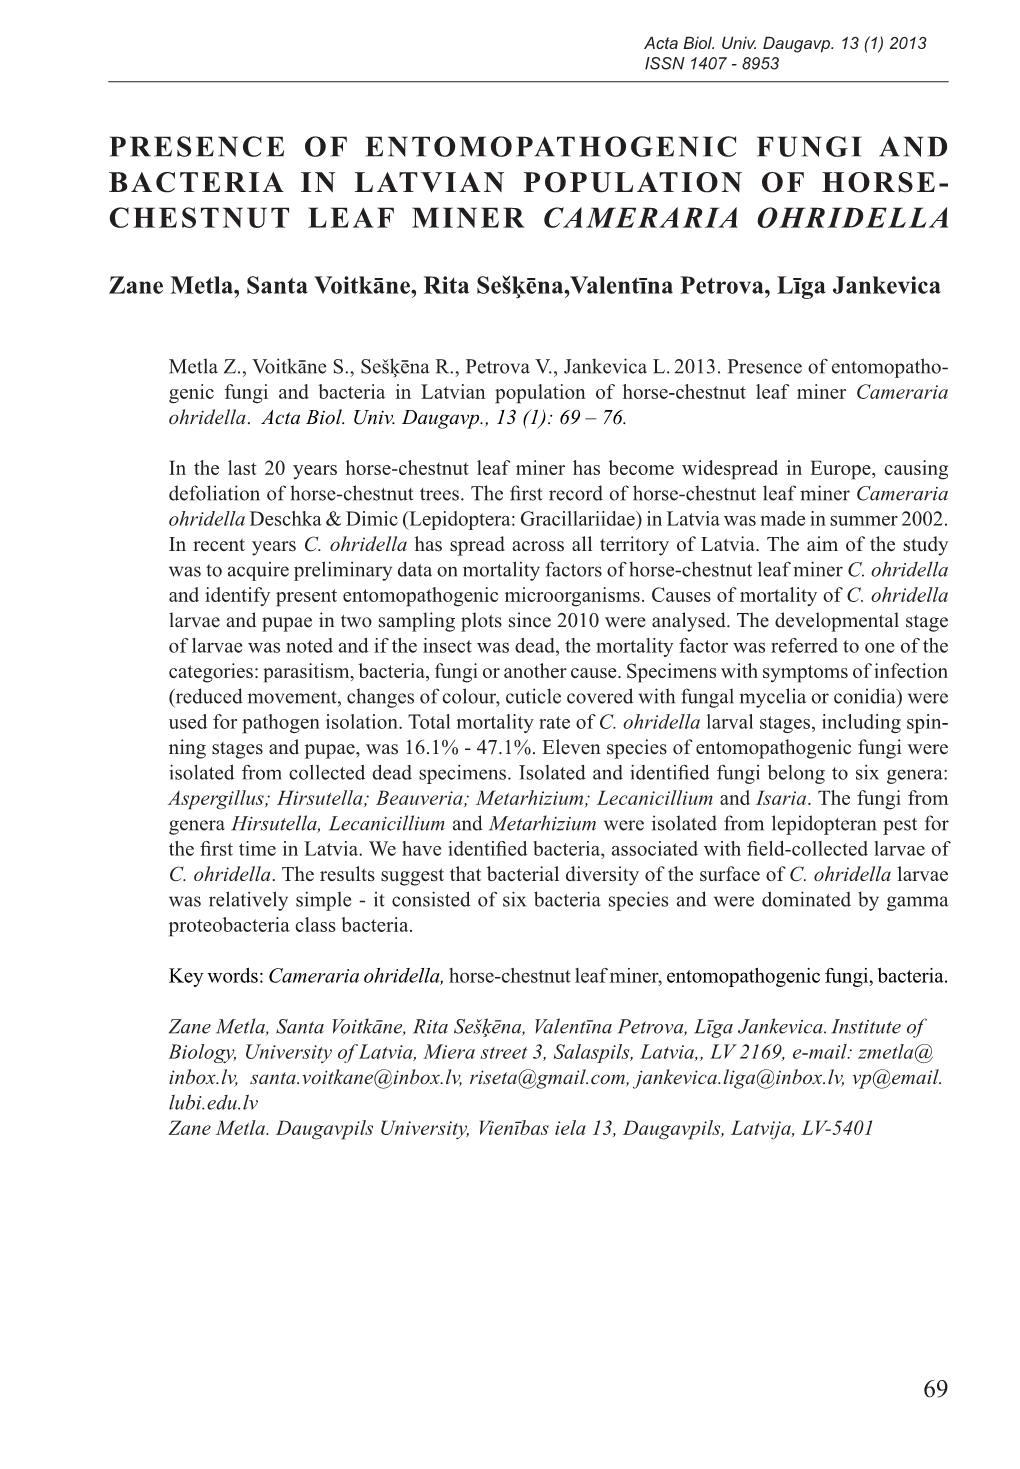 Presence of Entomopathogenic Fungi and Bacteria in Latvian Population of Horse- Chestnut Leaf Miner Cameraria Ohridella